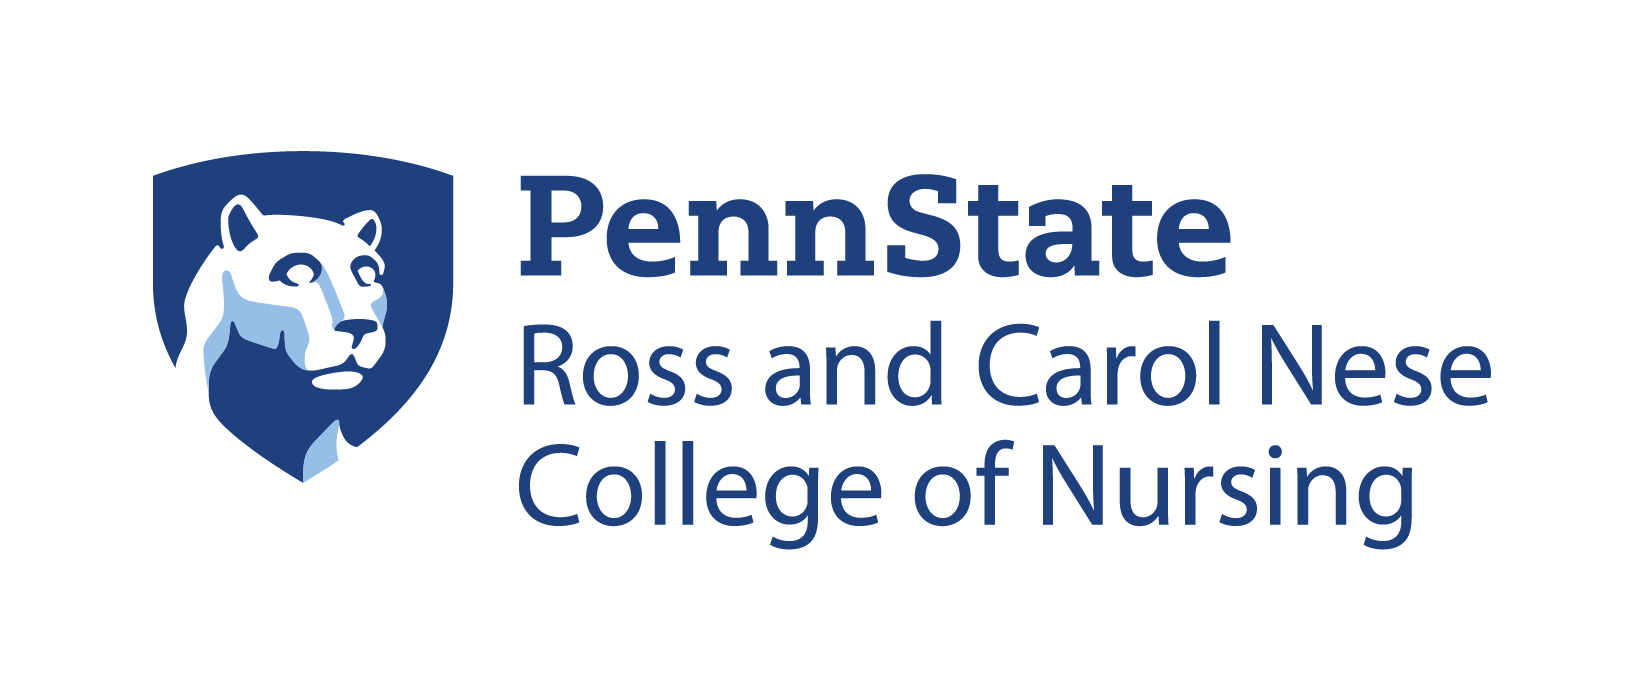 Penn State Ross and Carol Nese College of Nursing